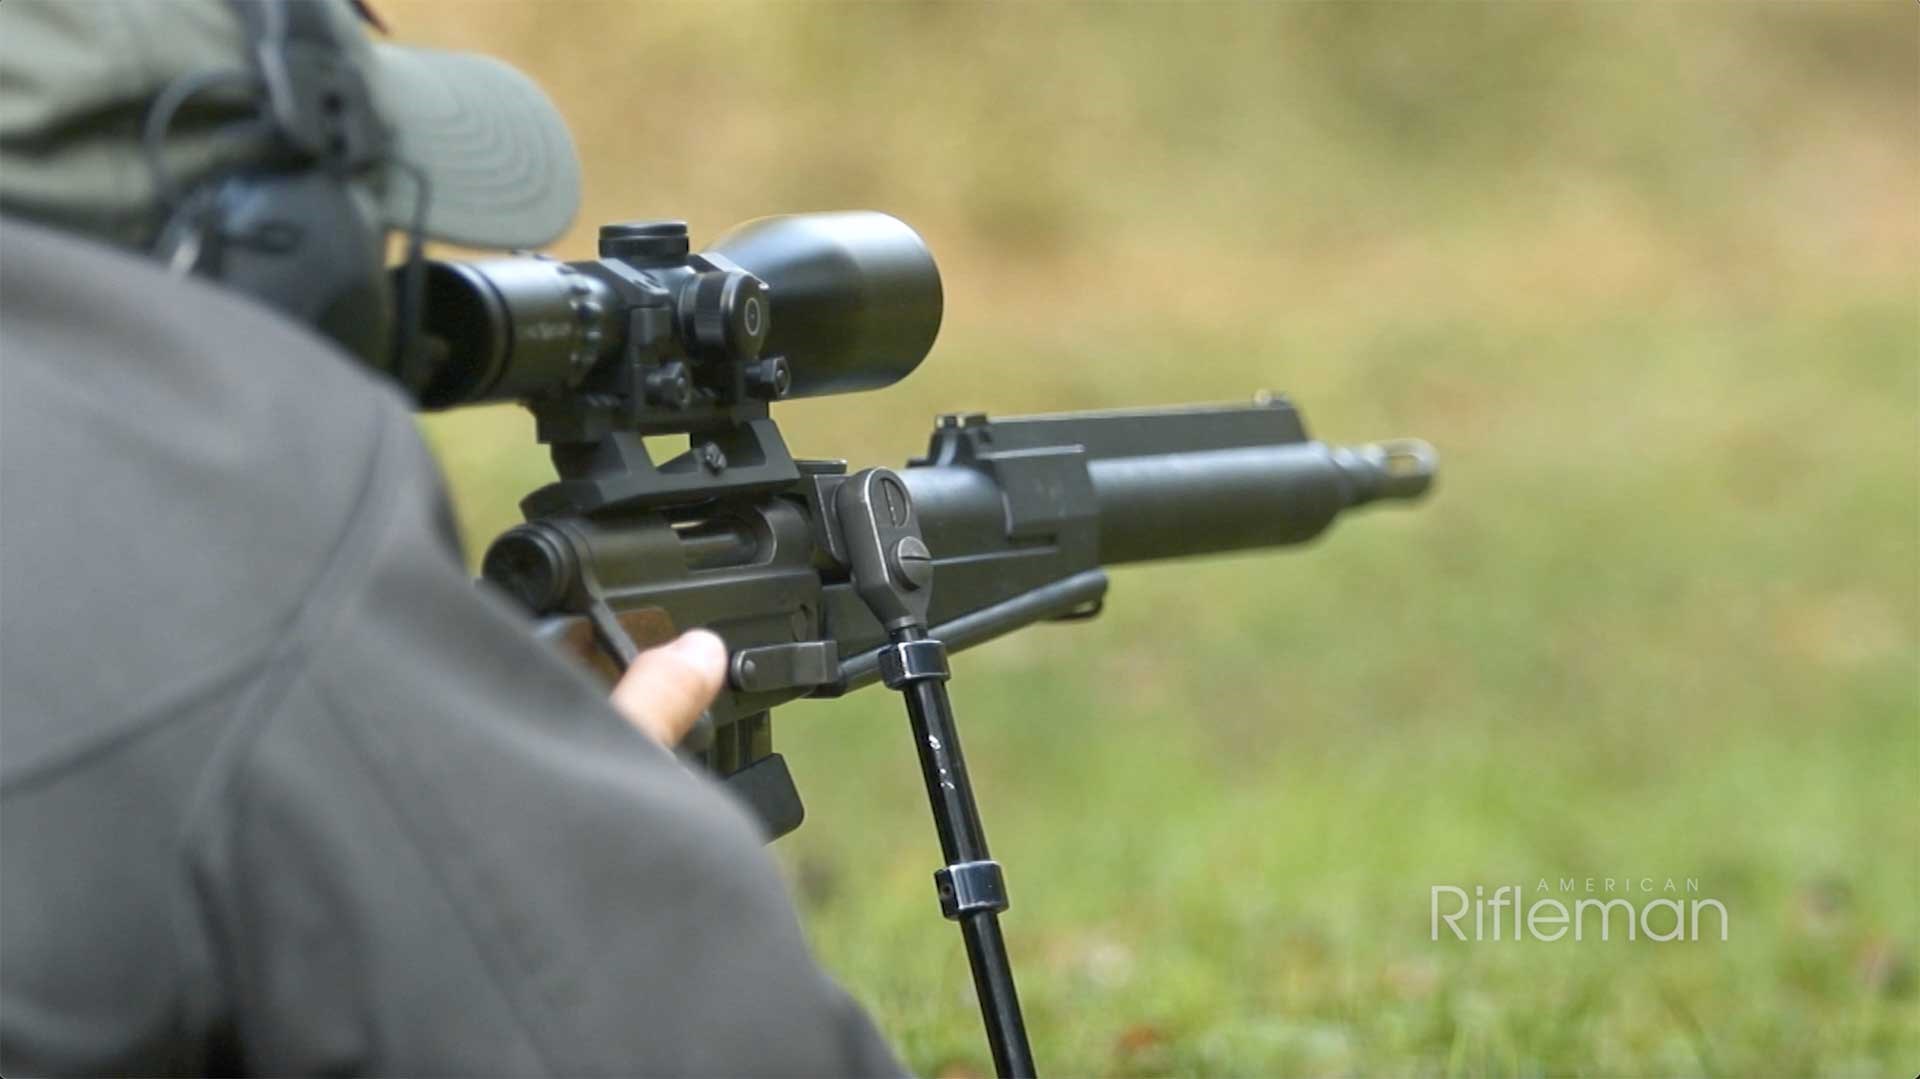 Man aiming FRF2 sniper rifle on a green, grassy range.